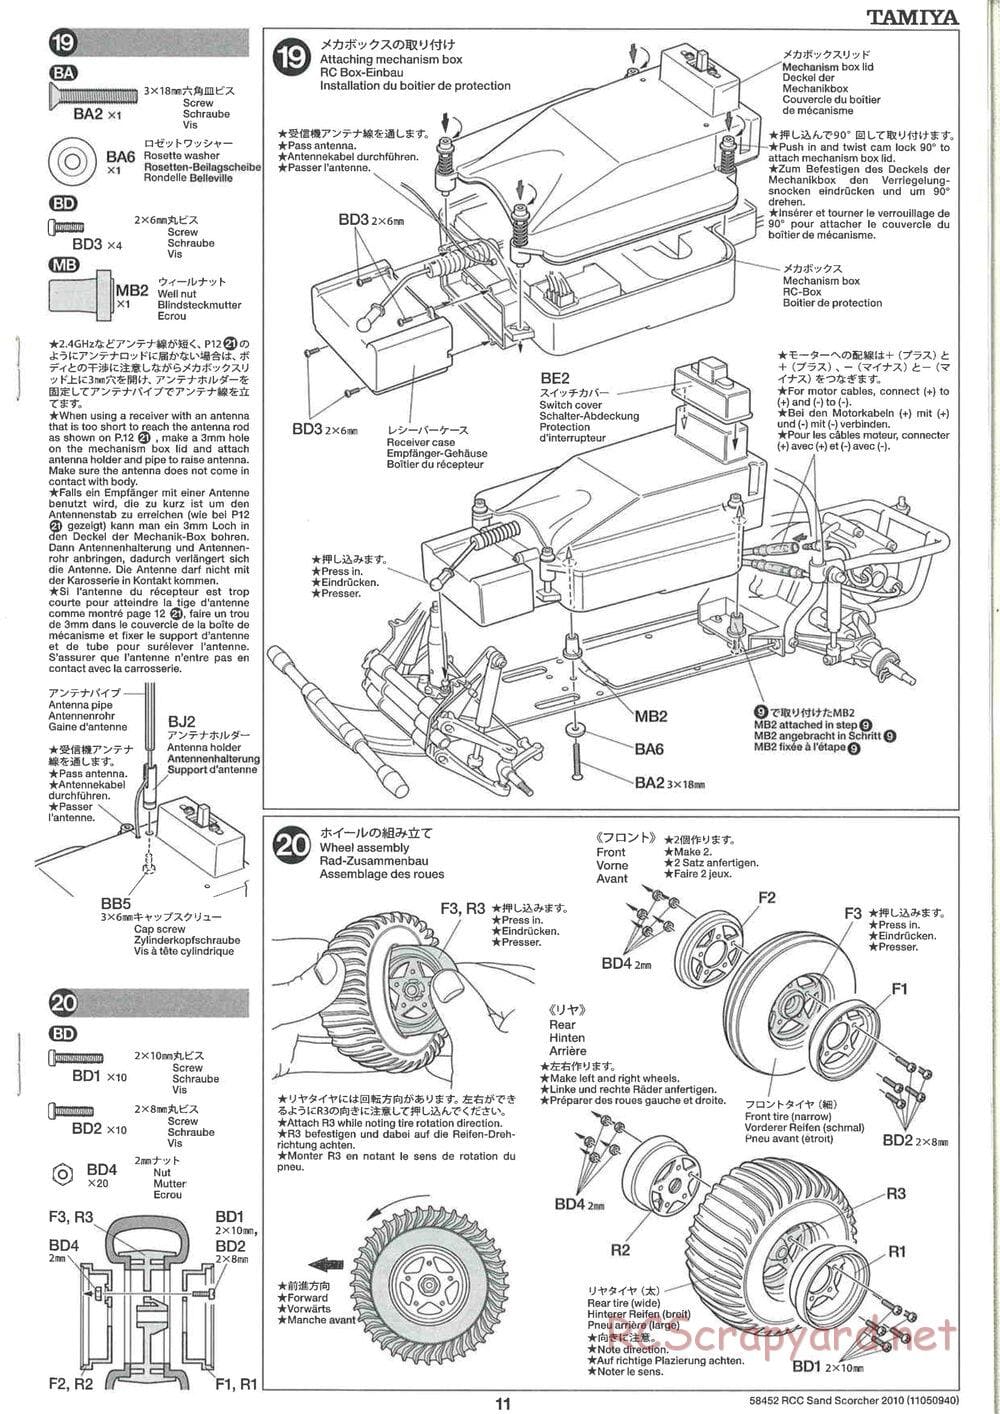 Tamiya - Sand Scorcher 2010 - SRB v1 Chassis - Manual - Page 11